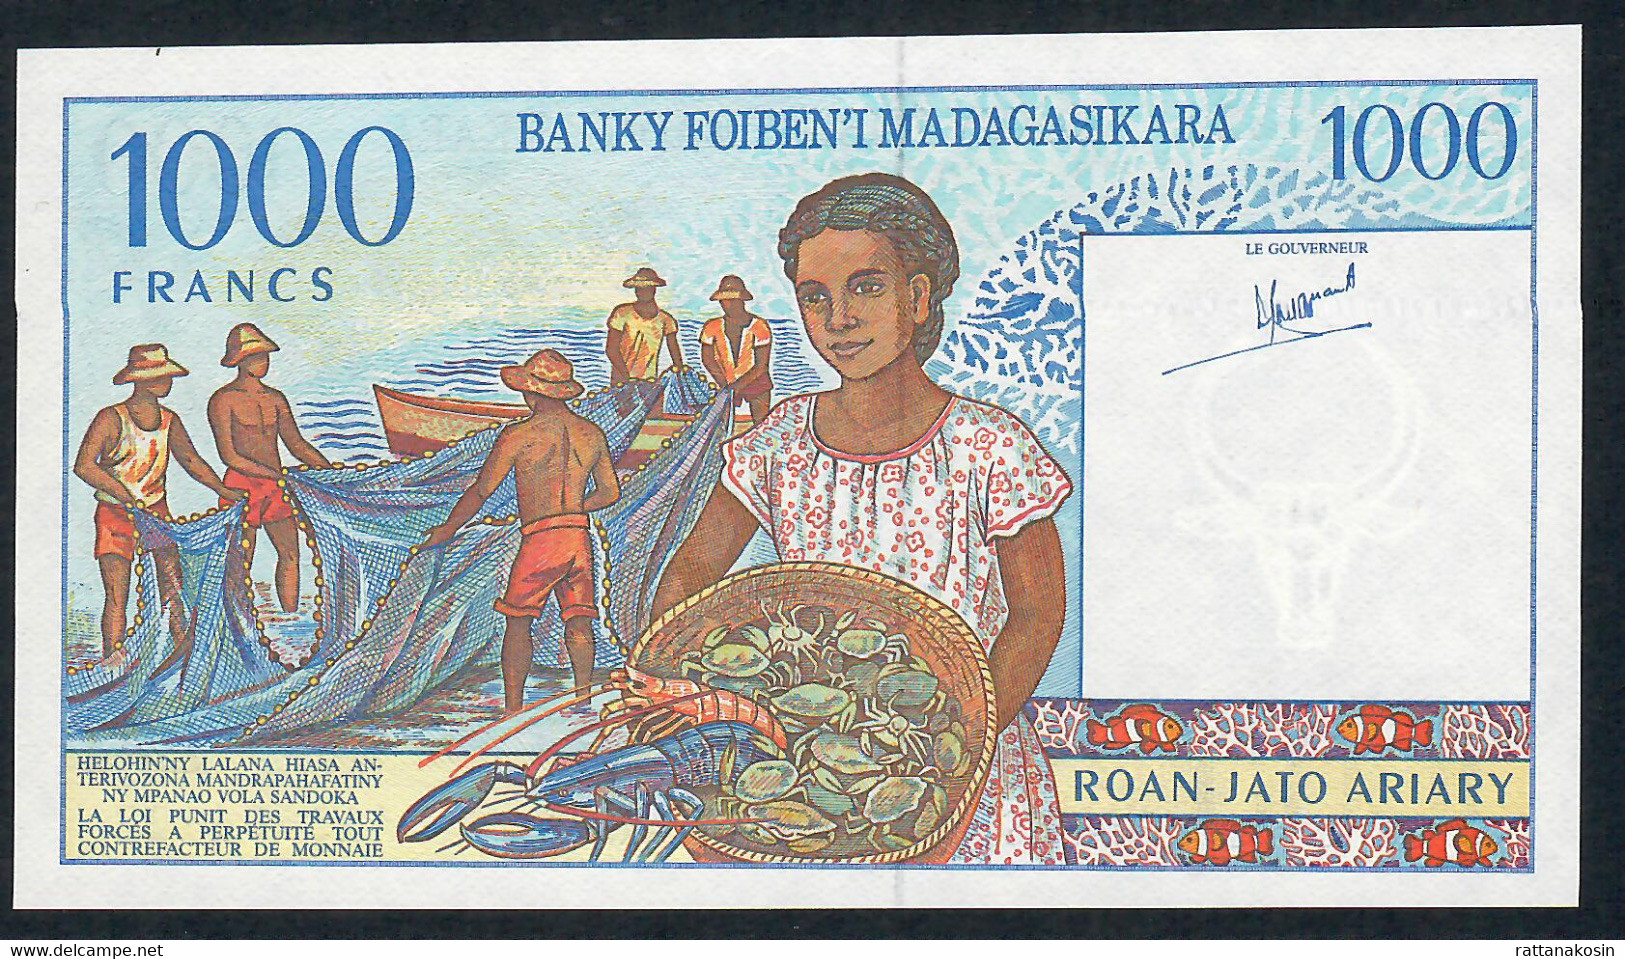 MADAGASCAR  P76a 1000 FRANCS   1994  #A  Signature 4   UNC - Madagascar